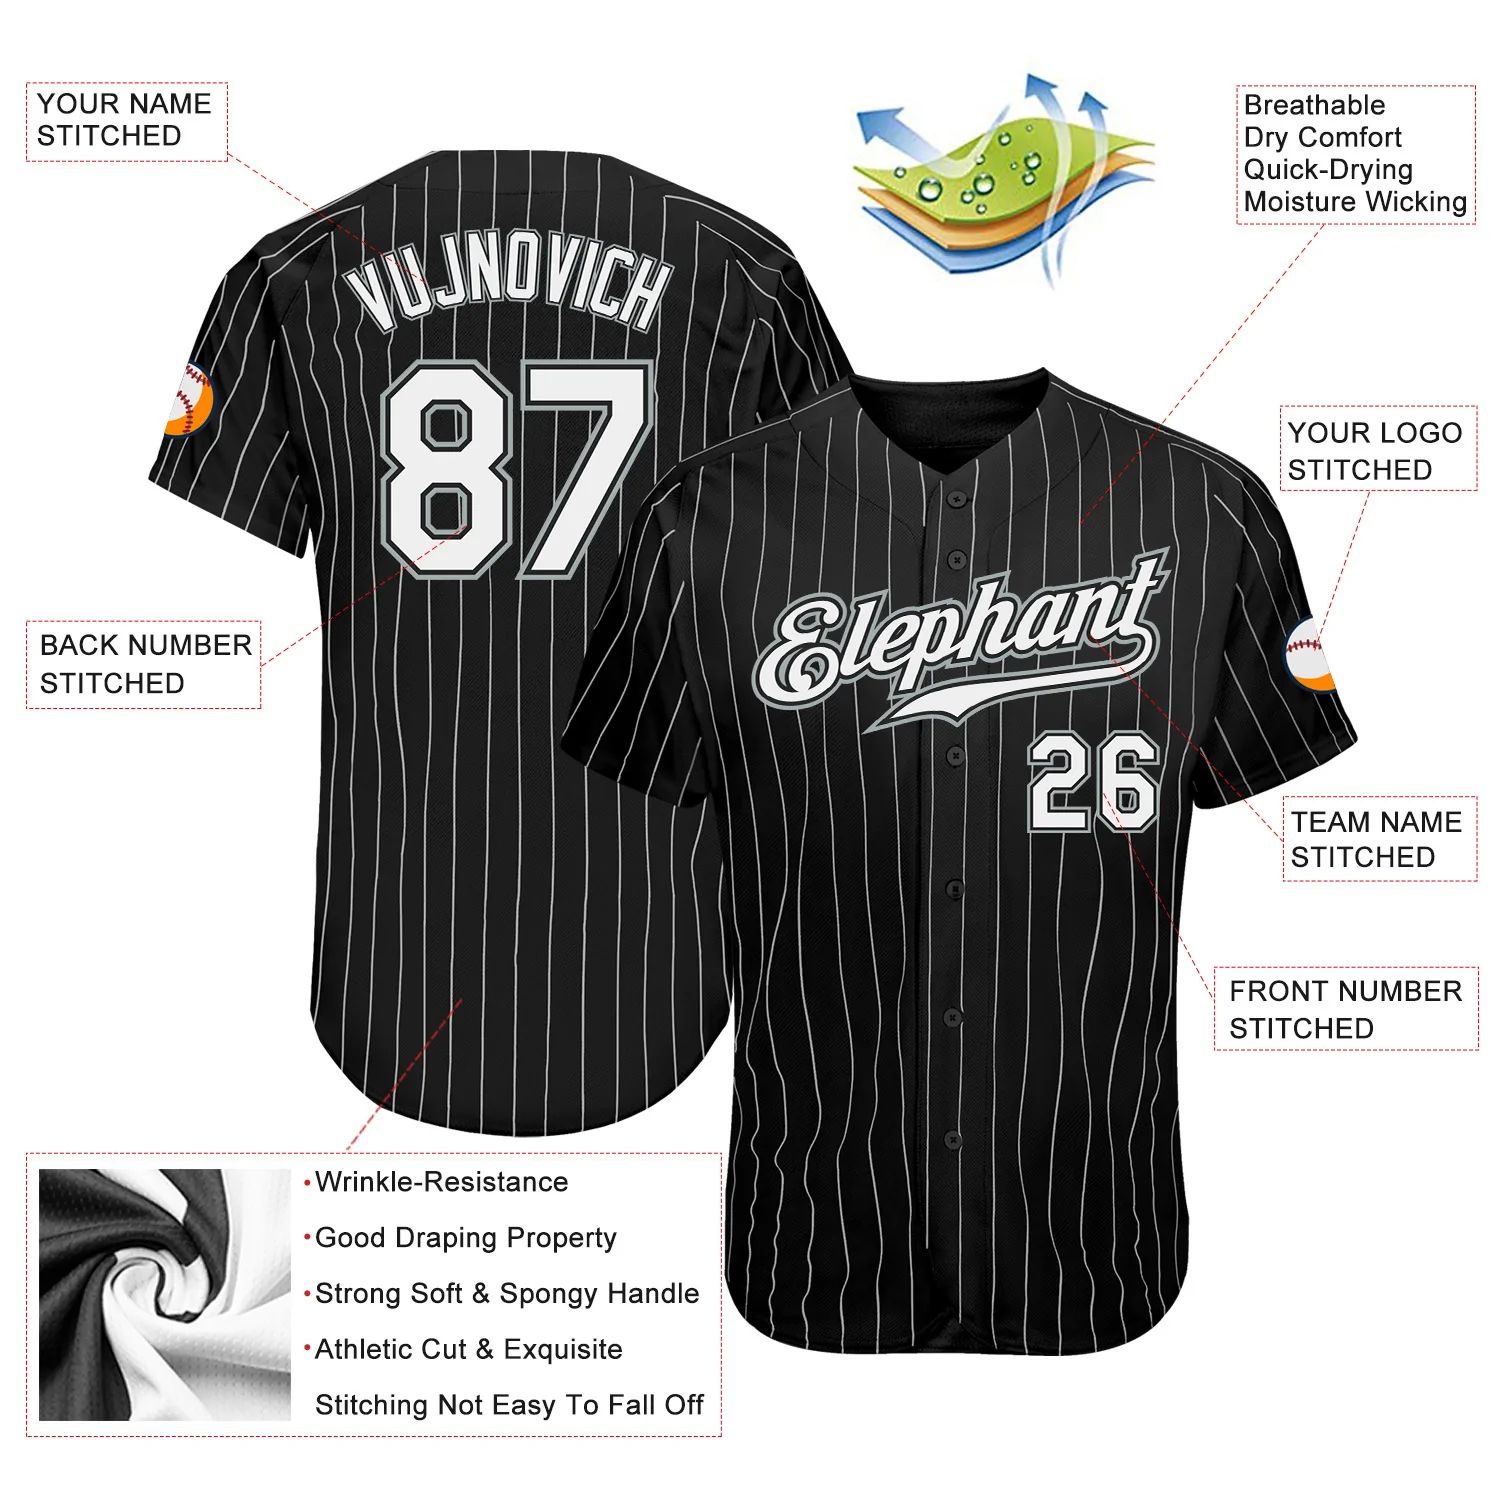 build-gray-black-pinstripe-baseball-white-jersey-authentic-black0435-online-3.jpg